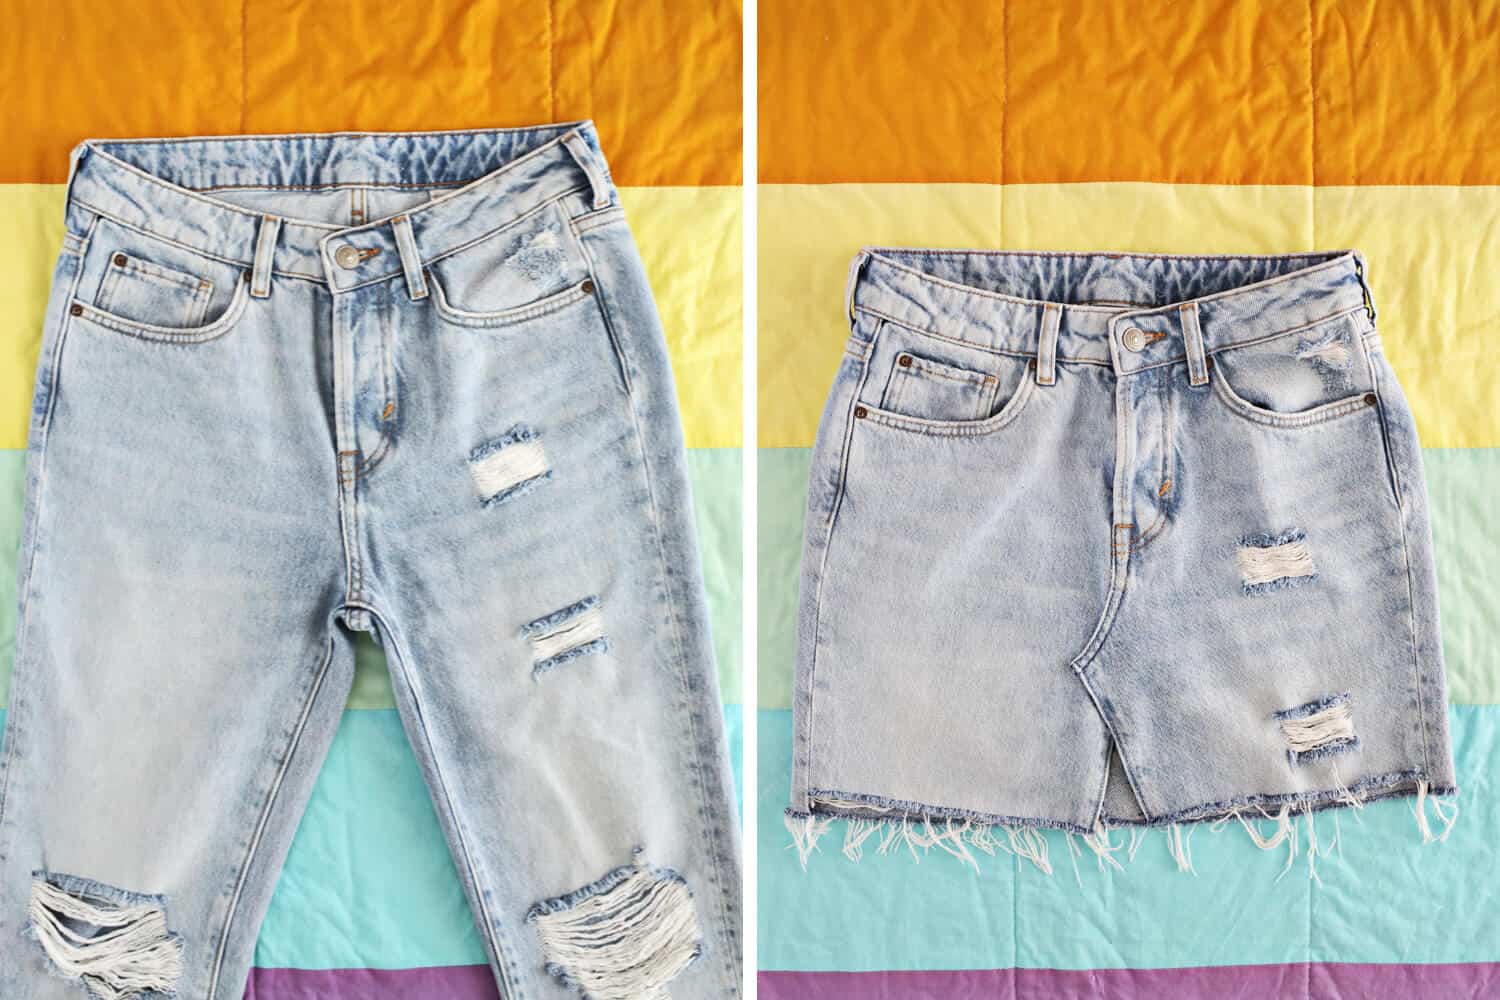 homemade jean skirts